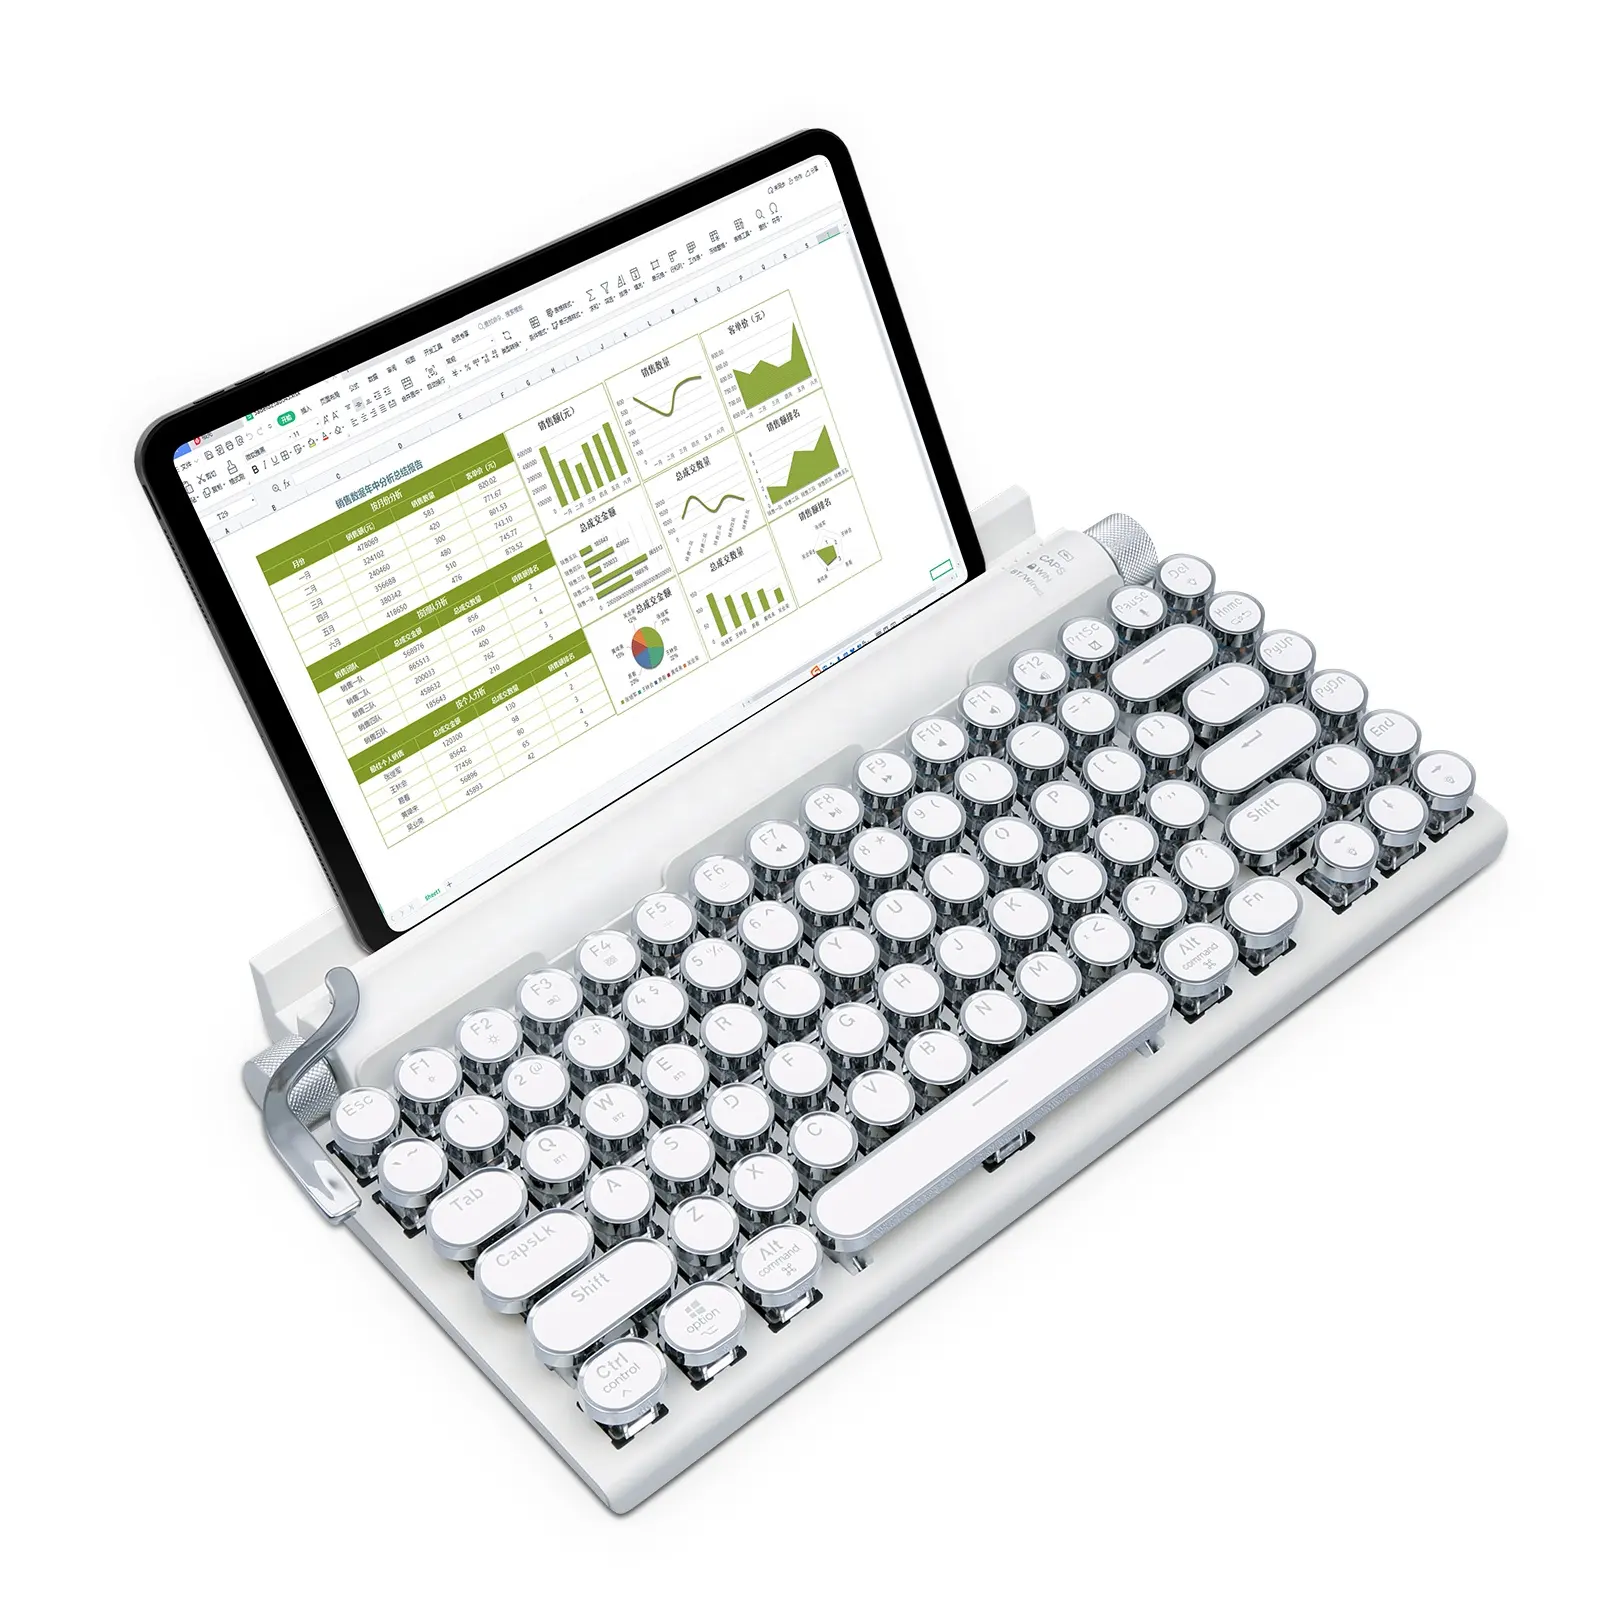 Savings Spotlight OUTEMUホットスワップブルースイッチクラシックパンクキーキャップワイヤレスタイプライタースタイルタブレット用メカニカルゲーミングキーボード